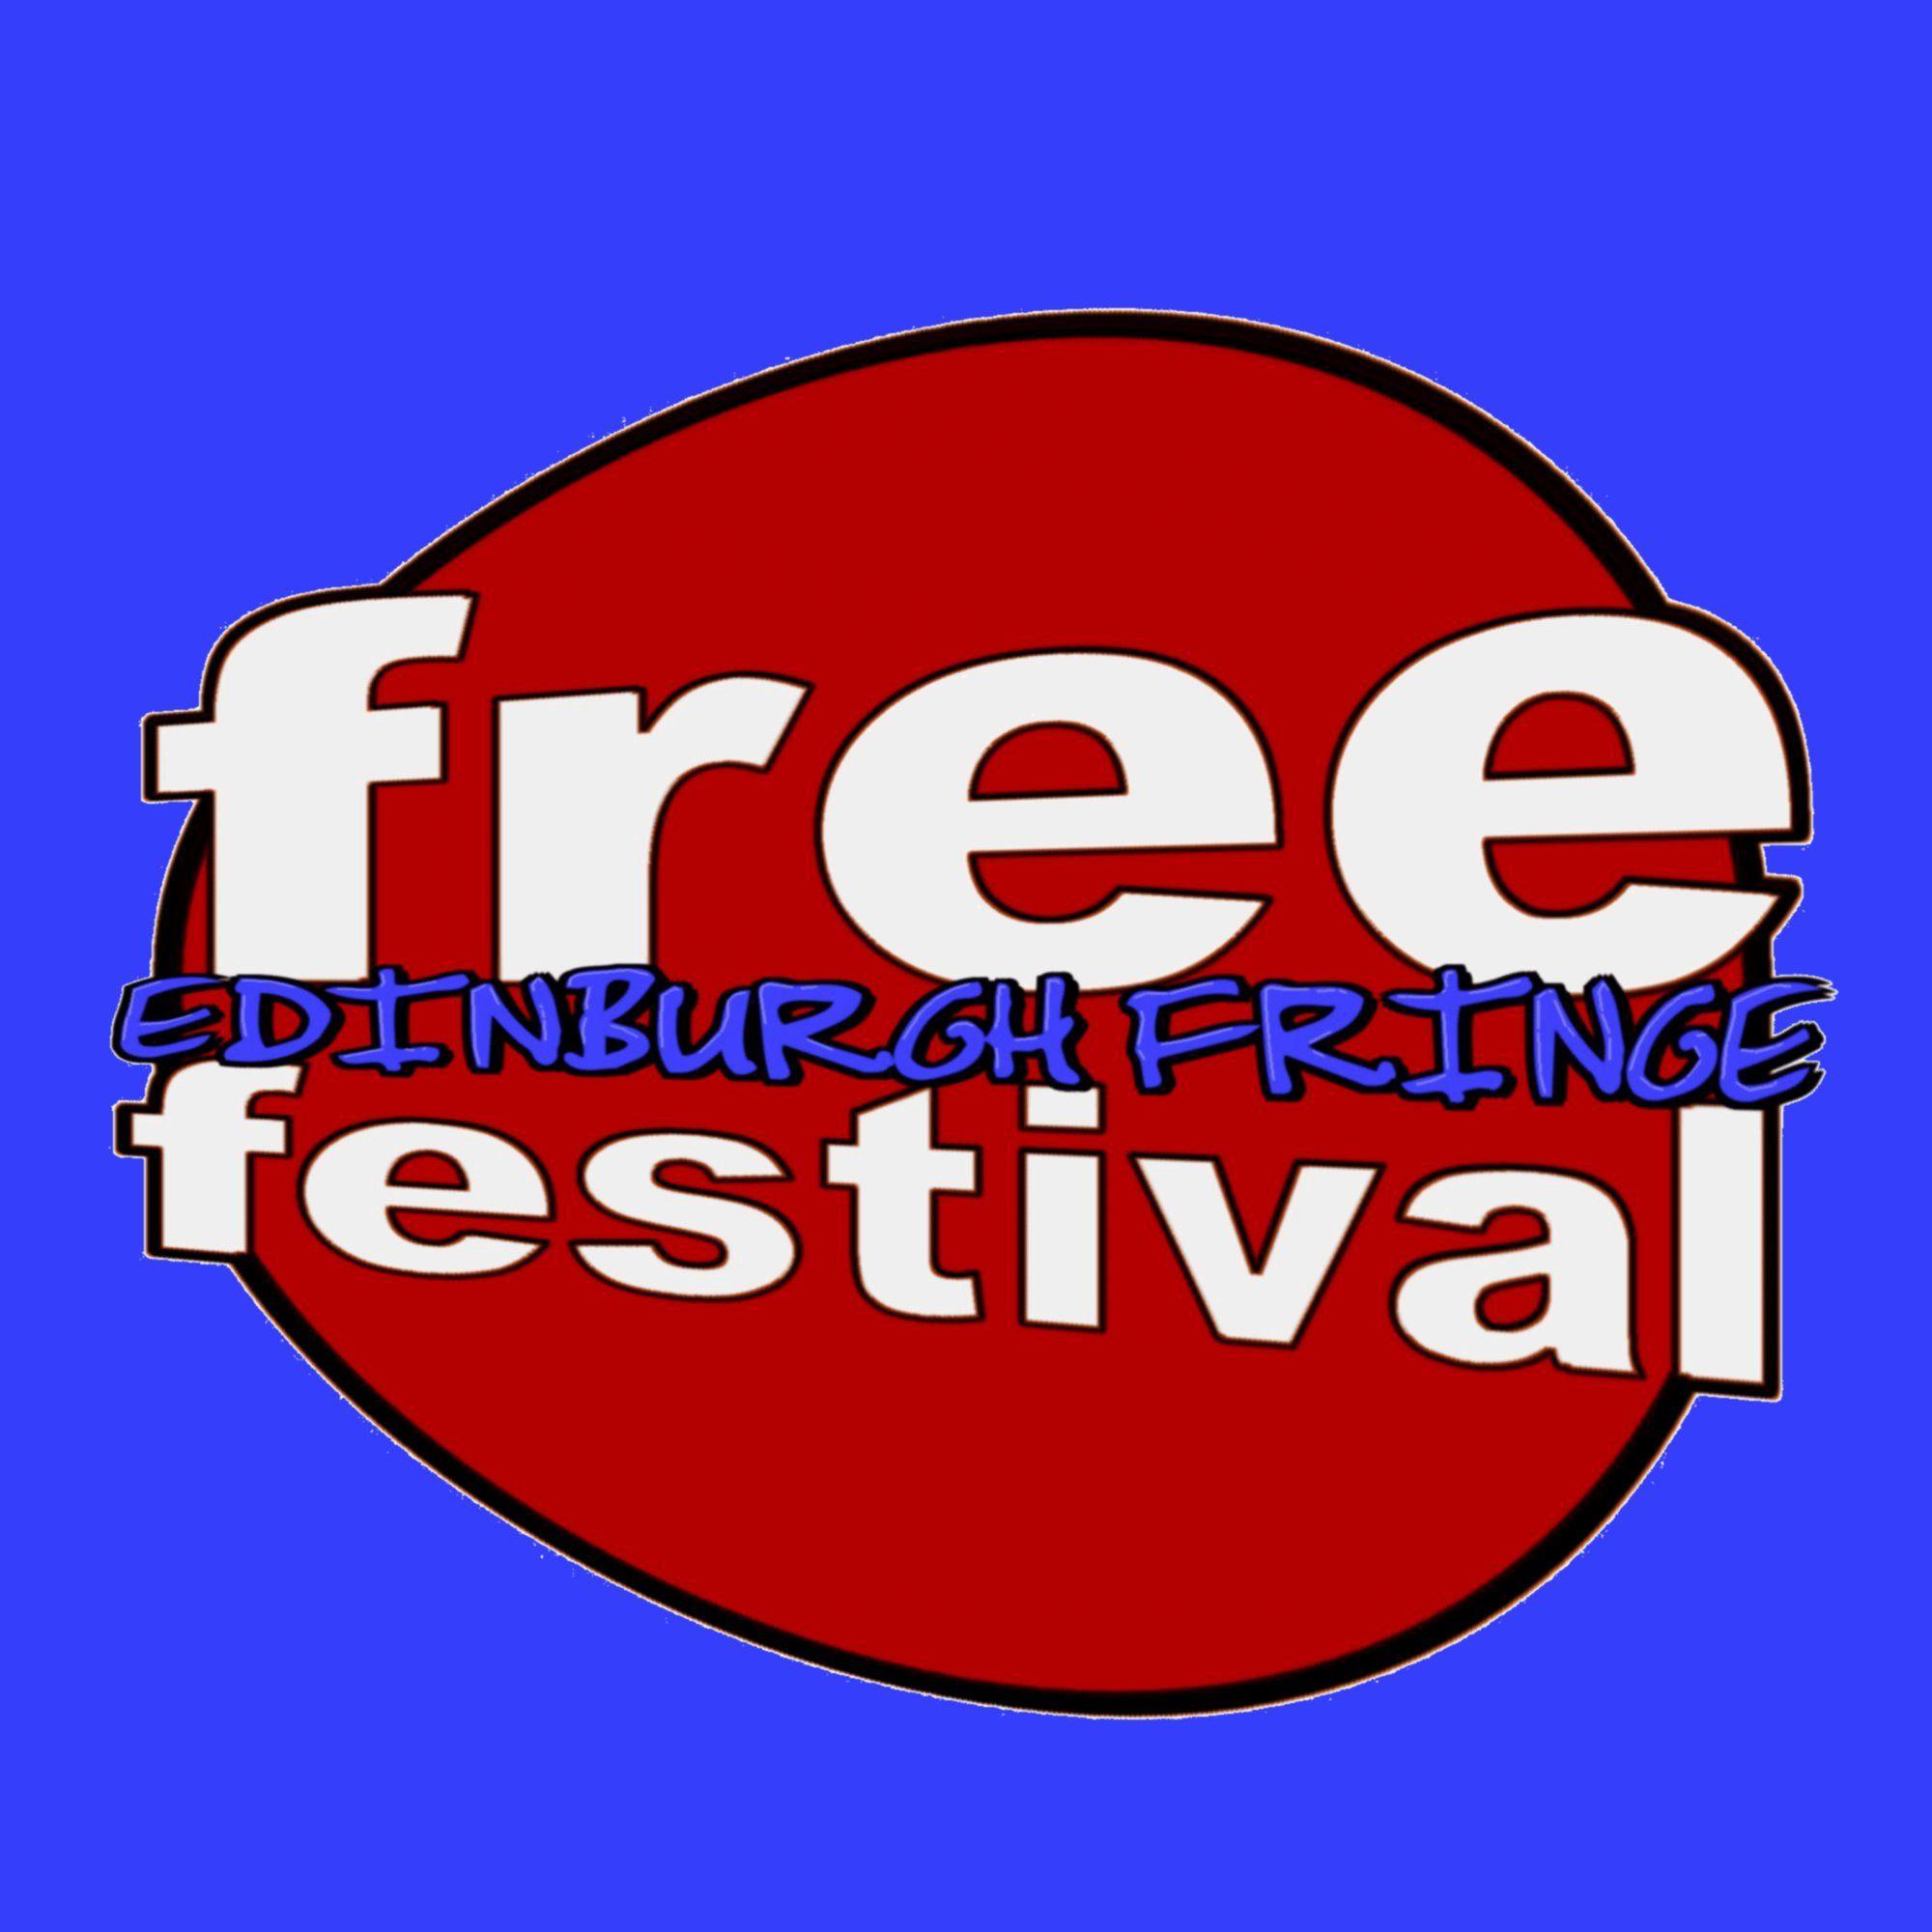 Fringed Red Circle Brand Logo - Free Edinburgh Fringe Festival